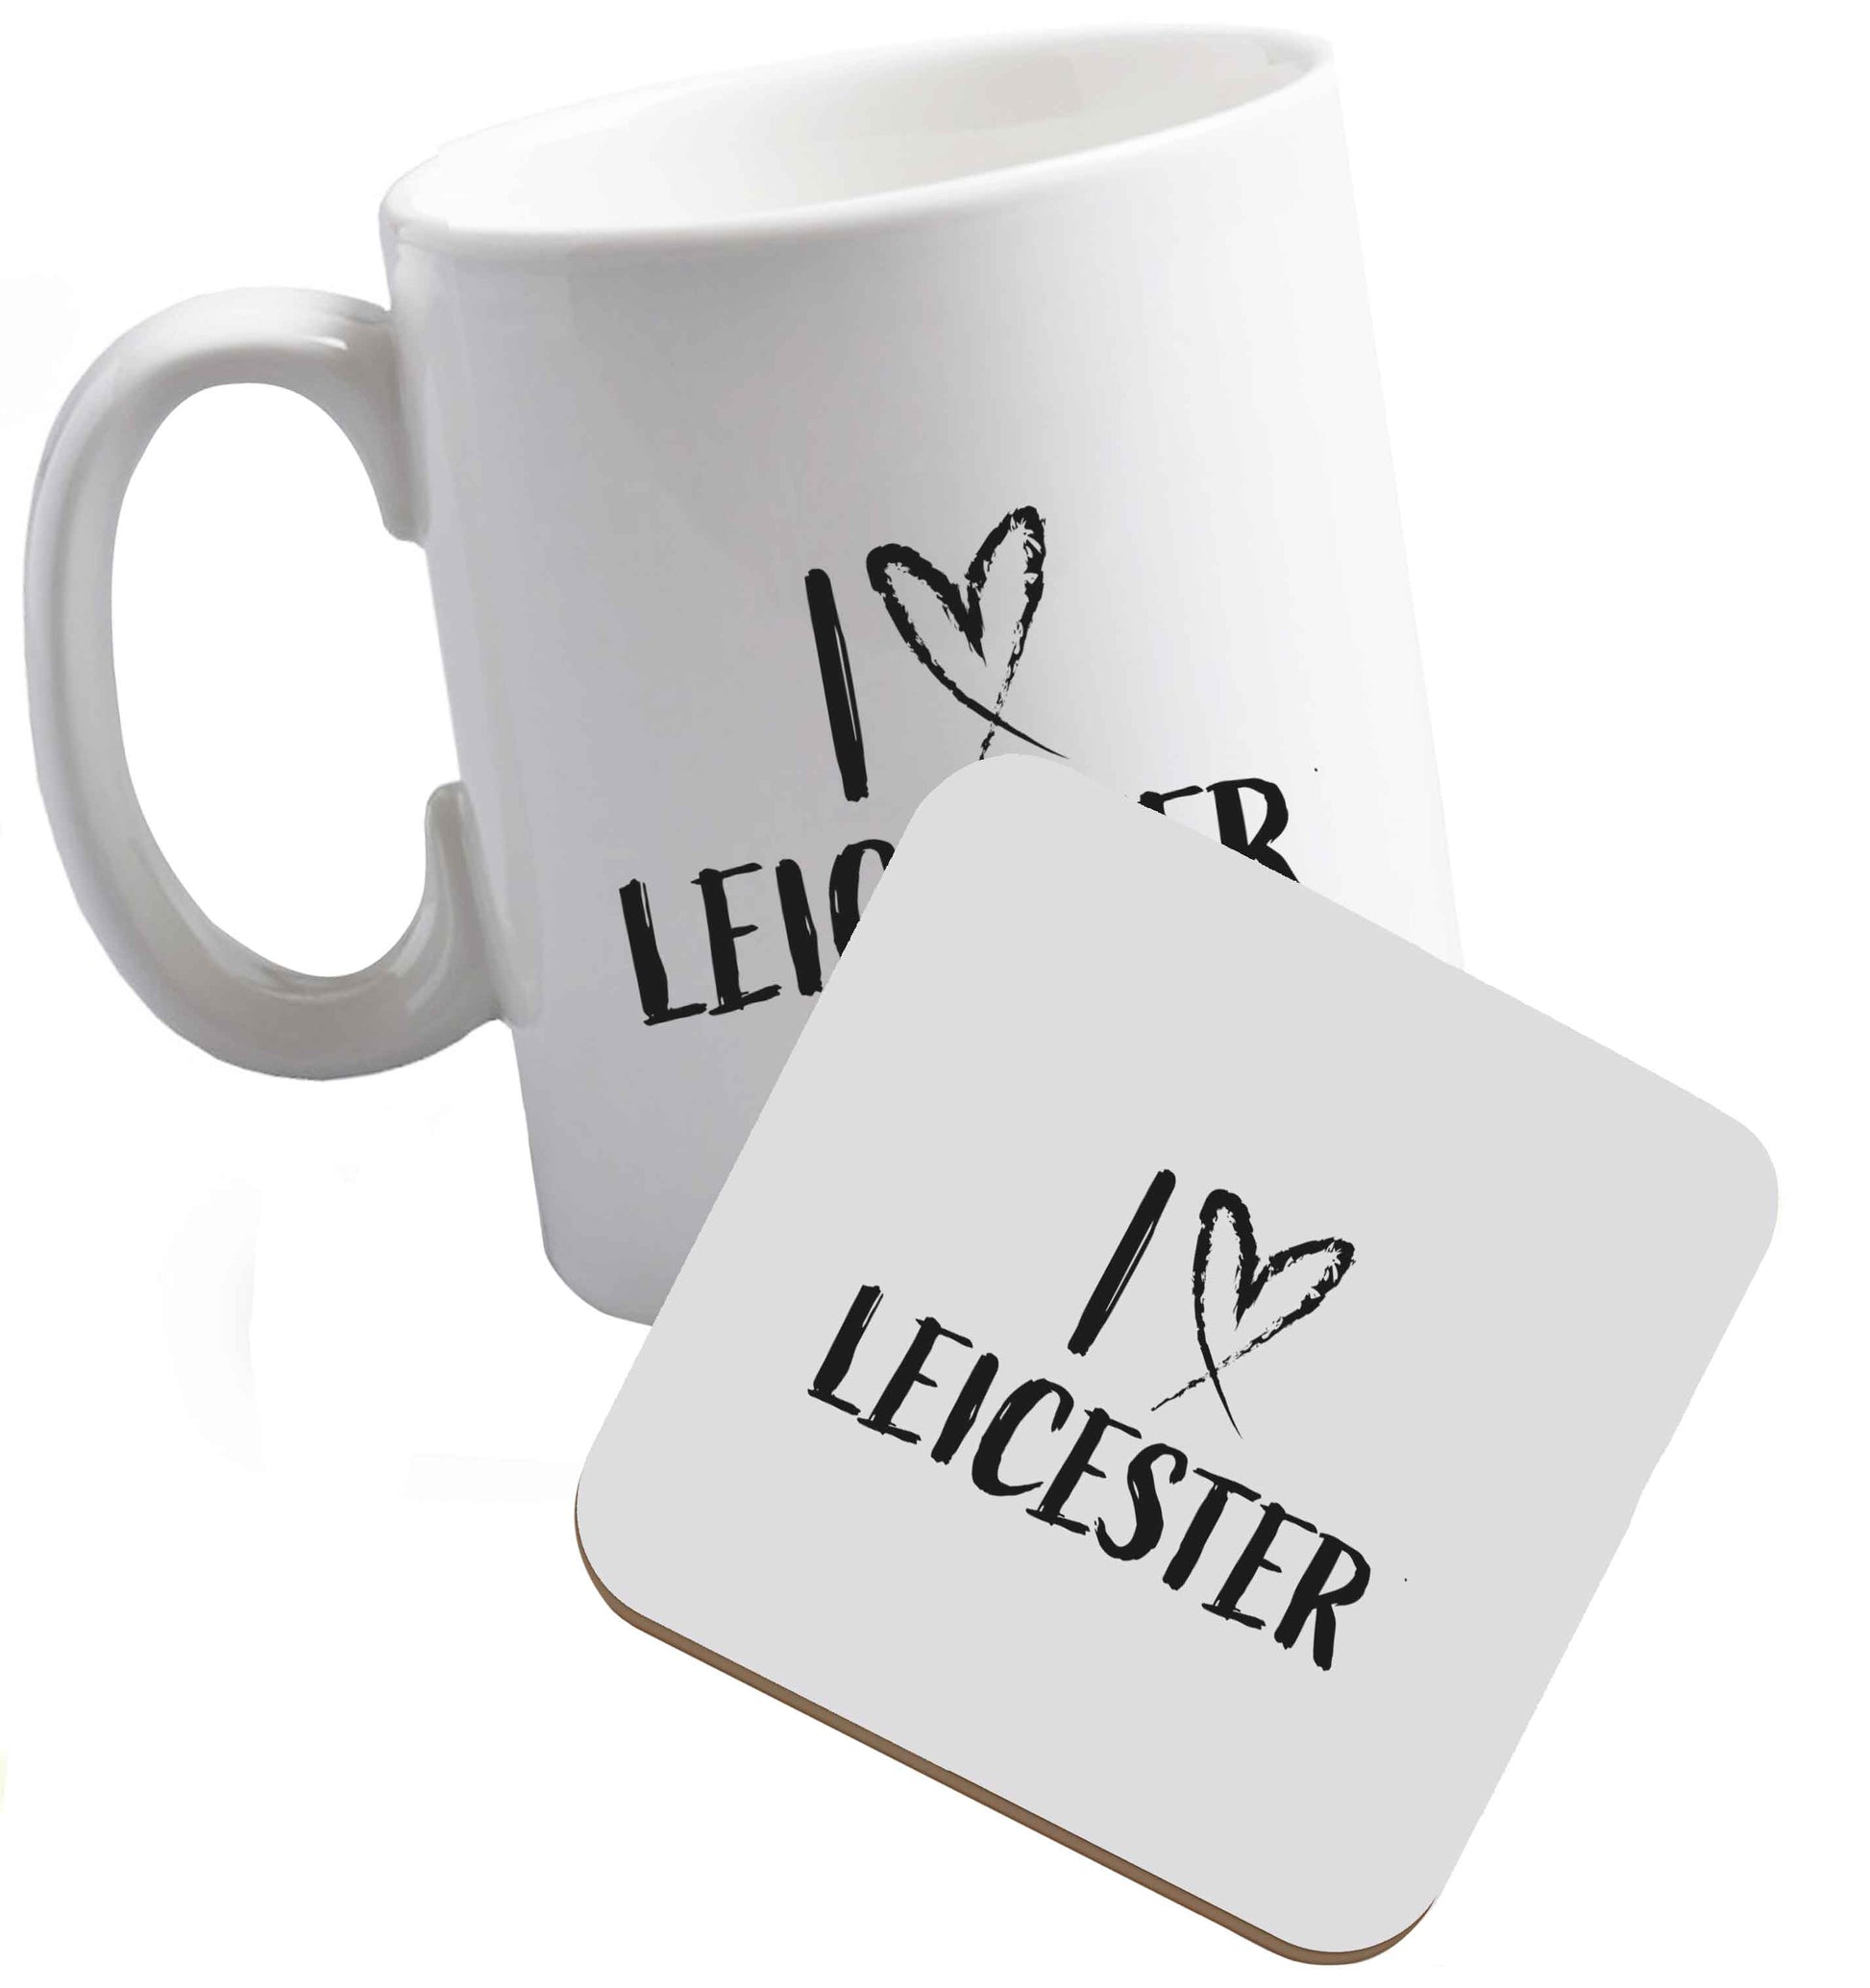 10 oz I love Leicester ceramic mug and coaster set right handed